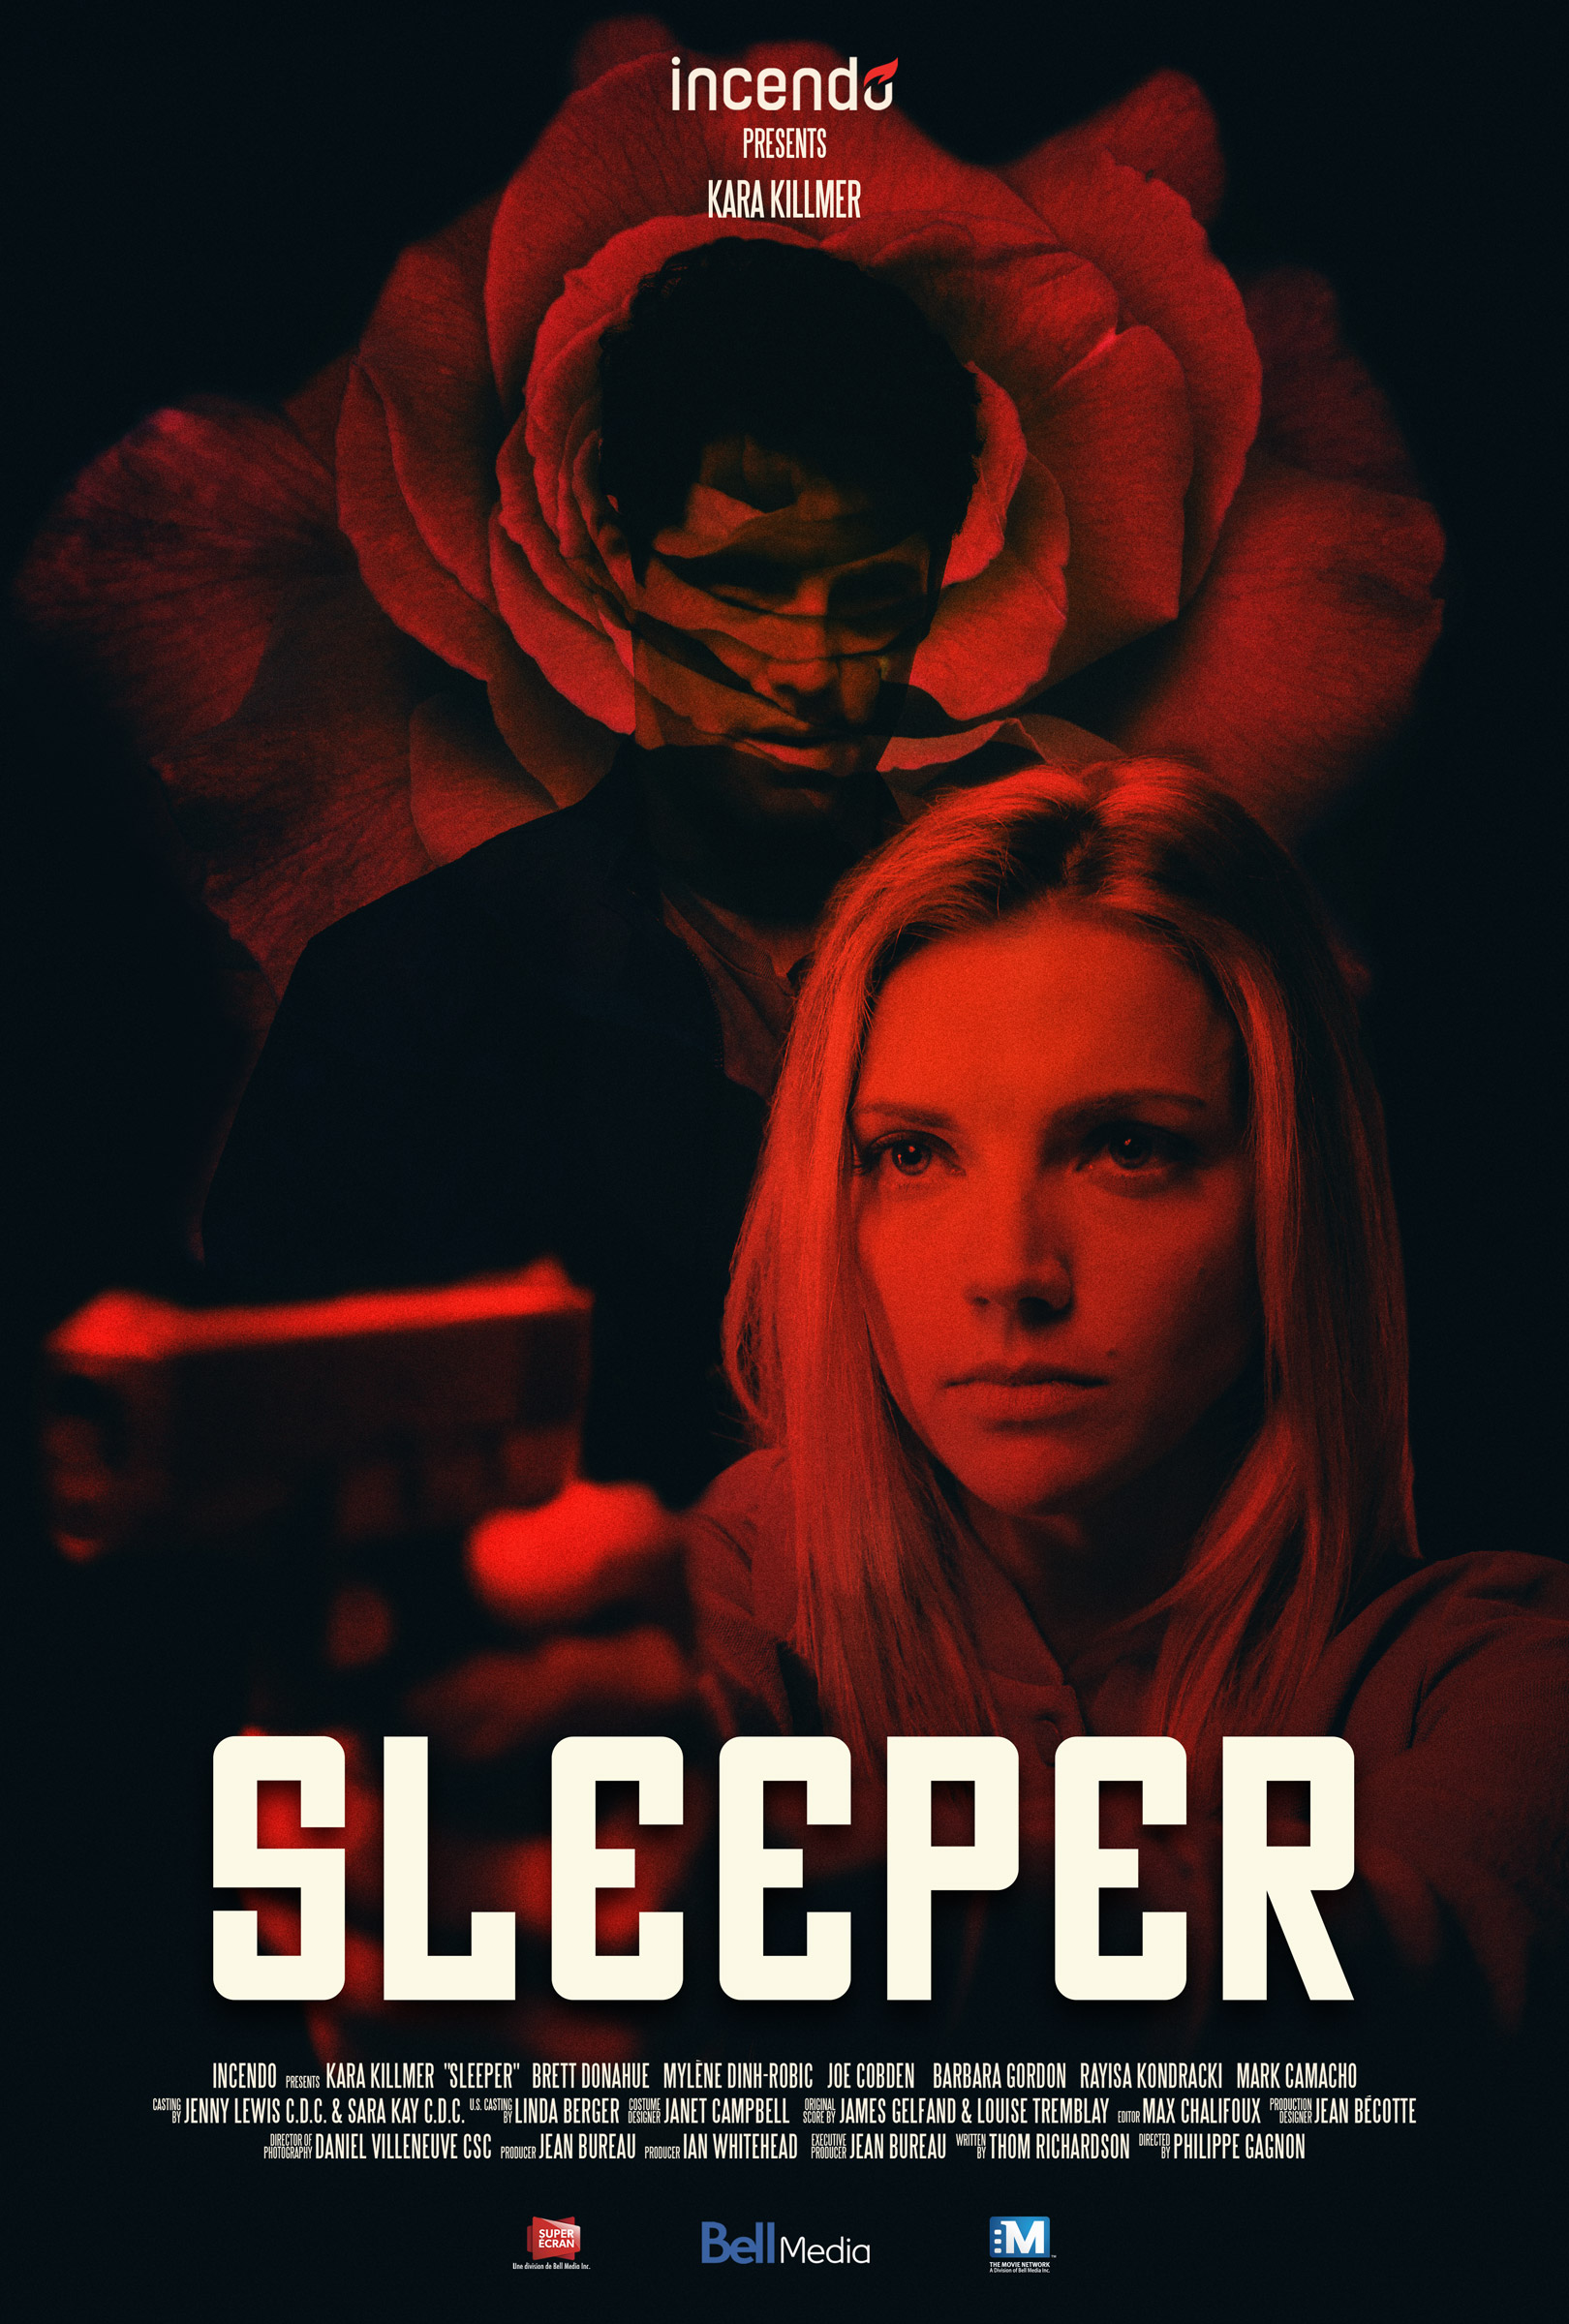 Sleeper (2018) starring Kara Killmer on DVD on DVD